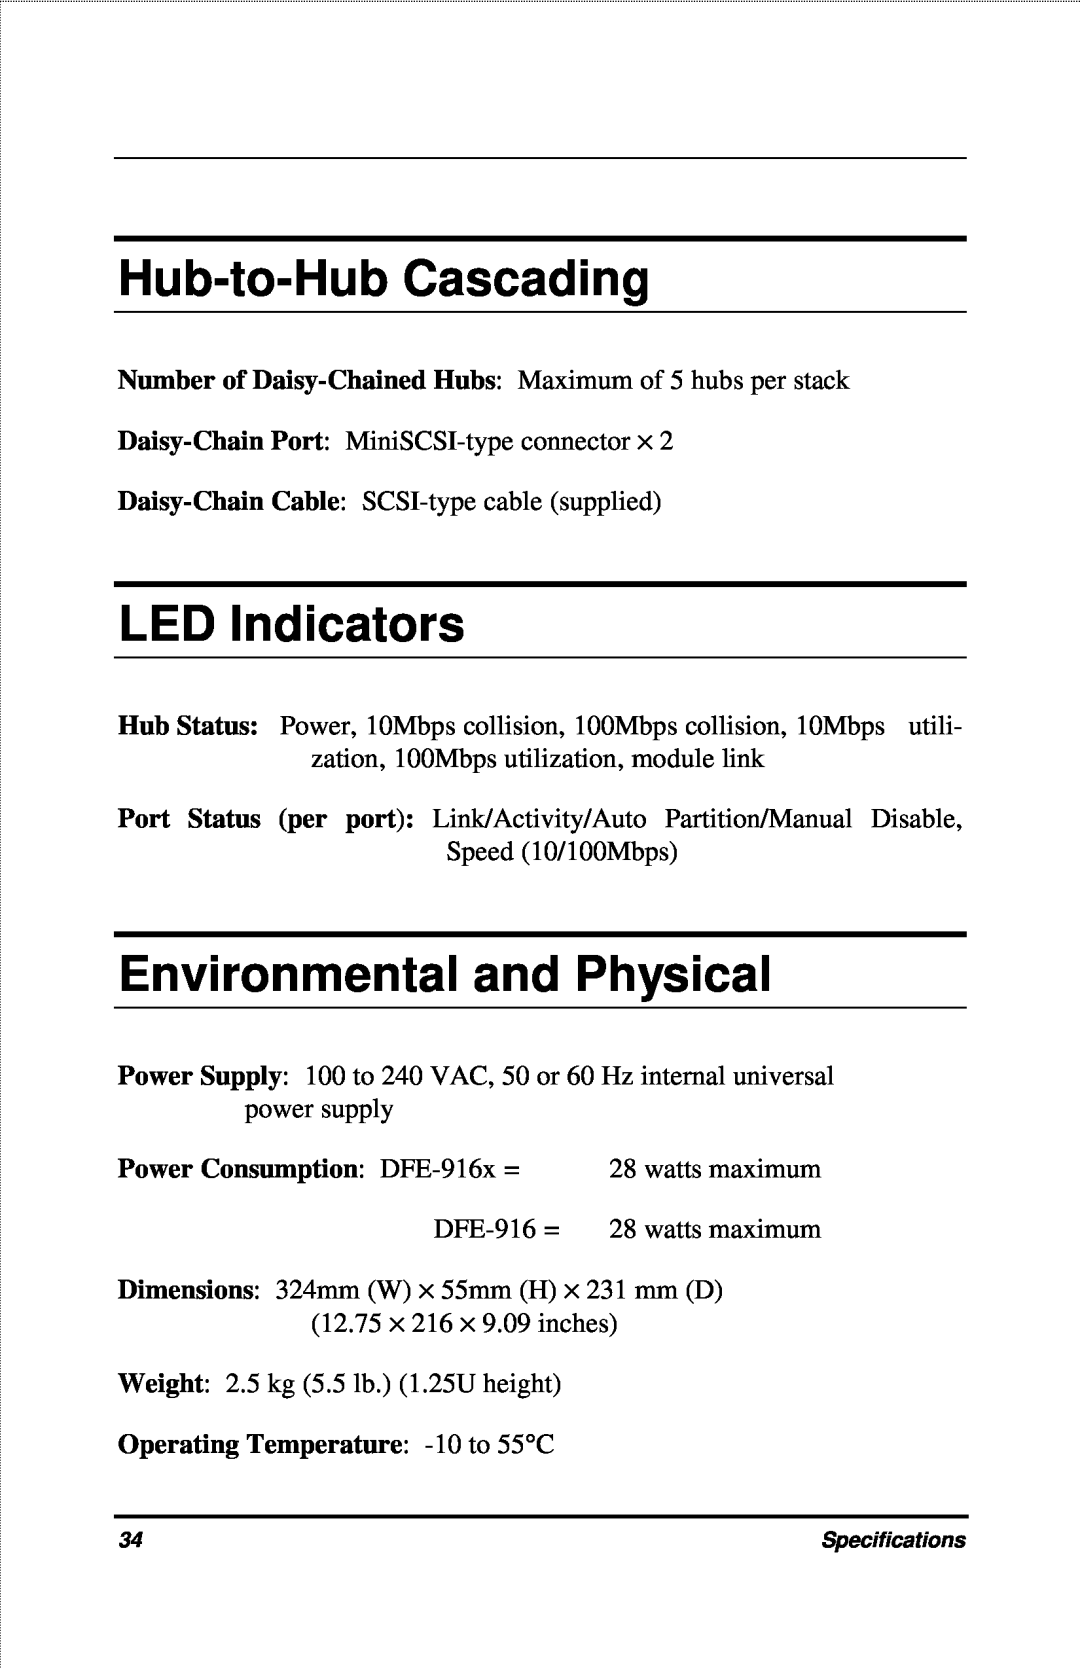 D-Link DFE-916X manual Hub-to-Hub Cascading, LED Indicators, Environmental and Physical, Power Consumption DFE-916x = 